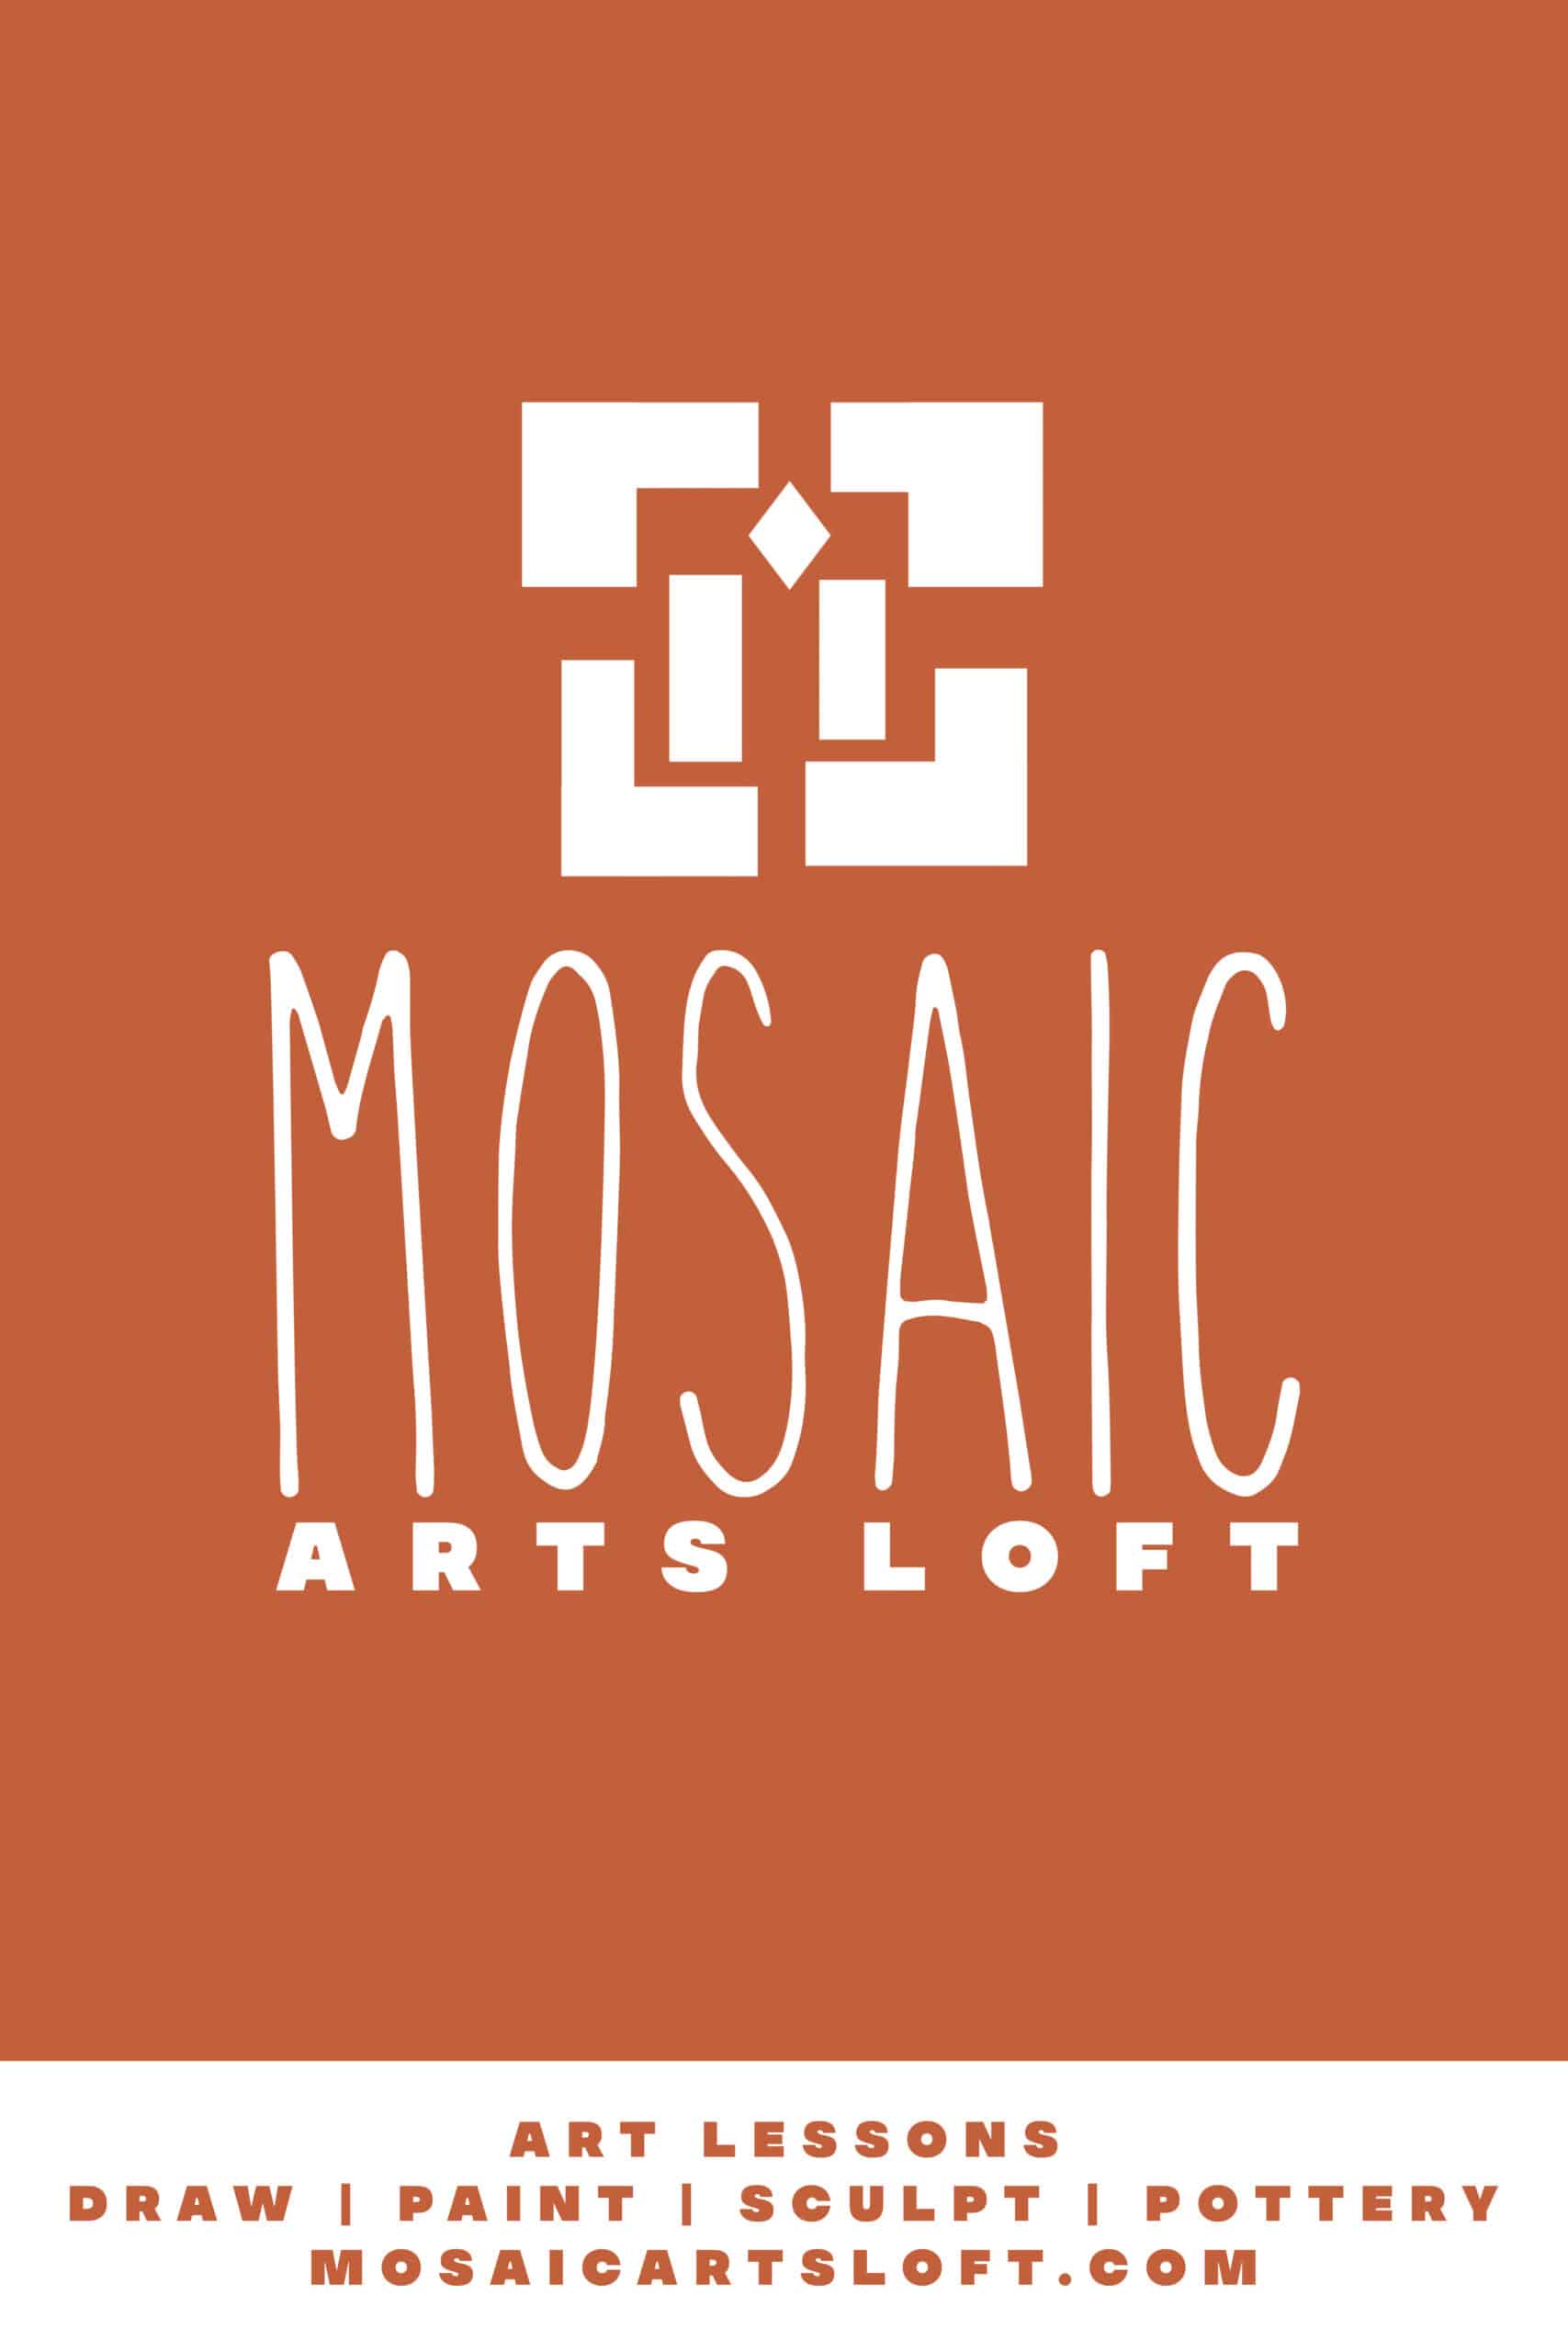 Mosaic Arts Loft